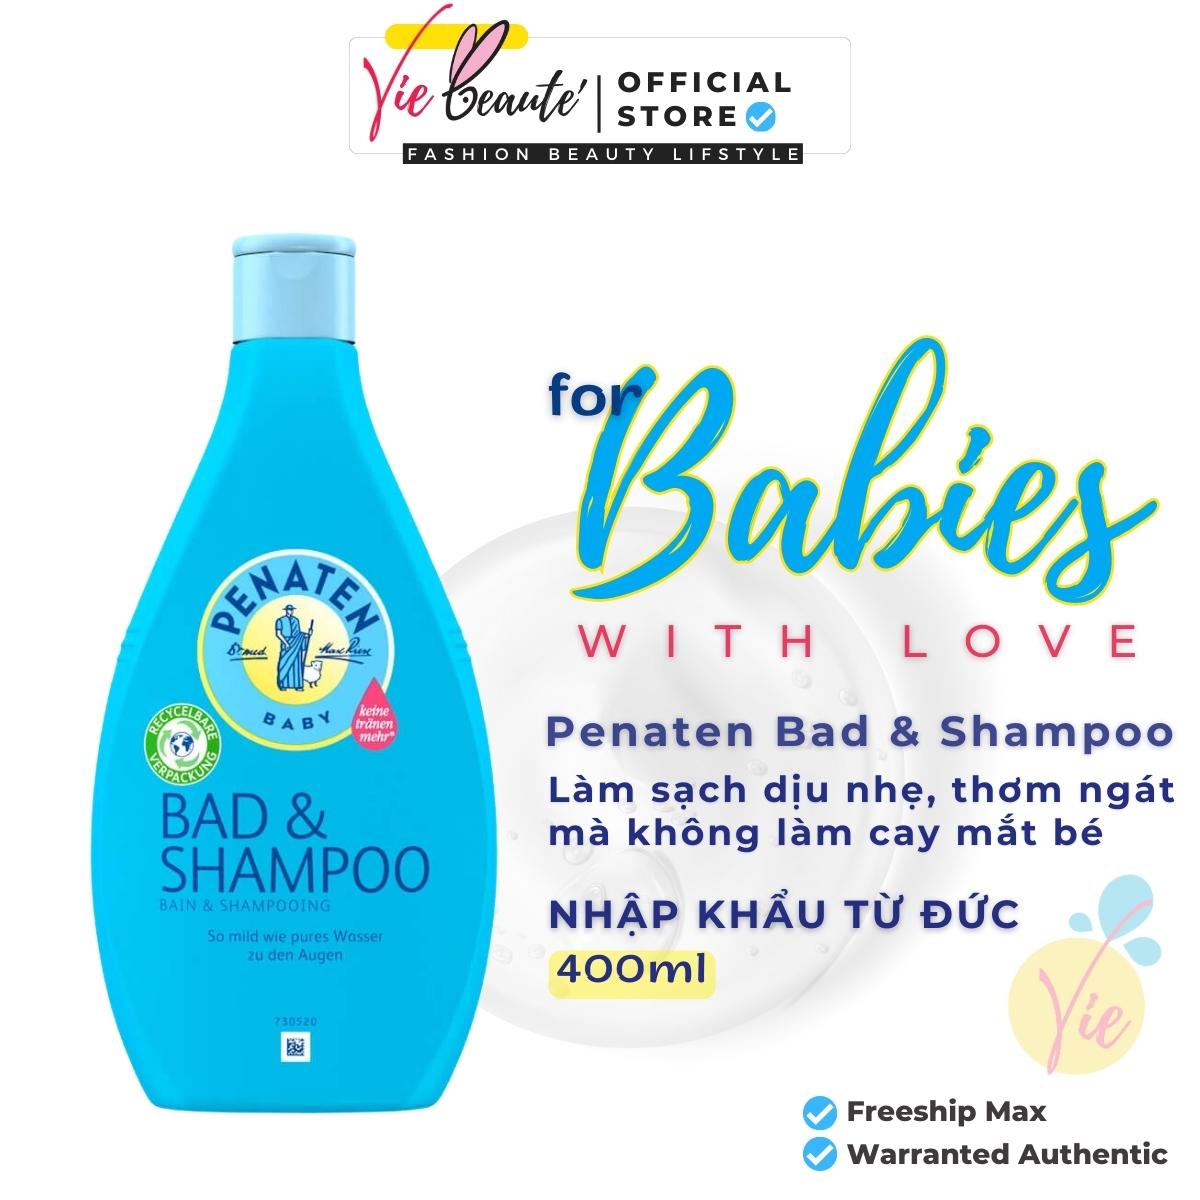 Sữa tắm gội trẻ em Penaten Bad & Shampoo cho bé 400ml